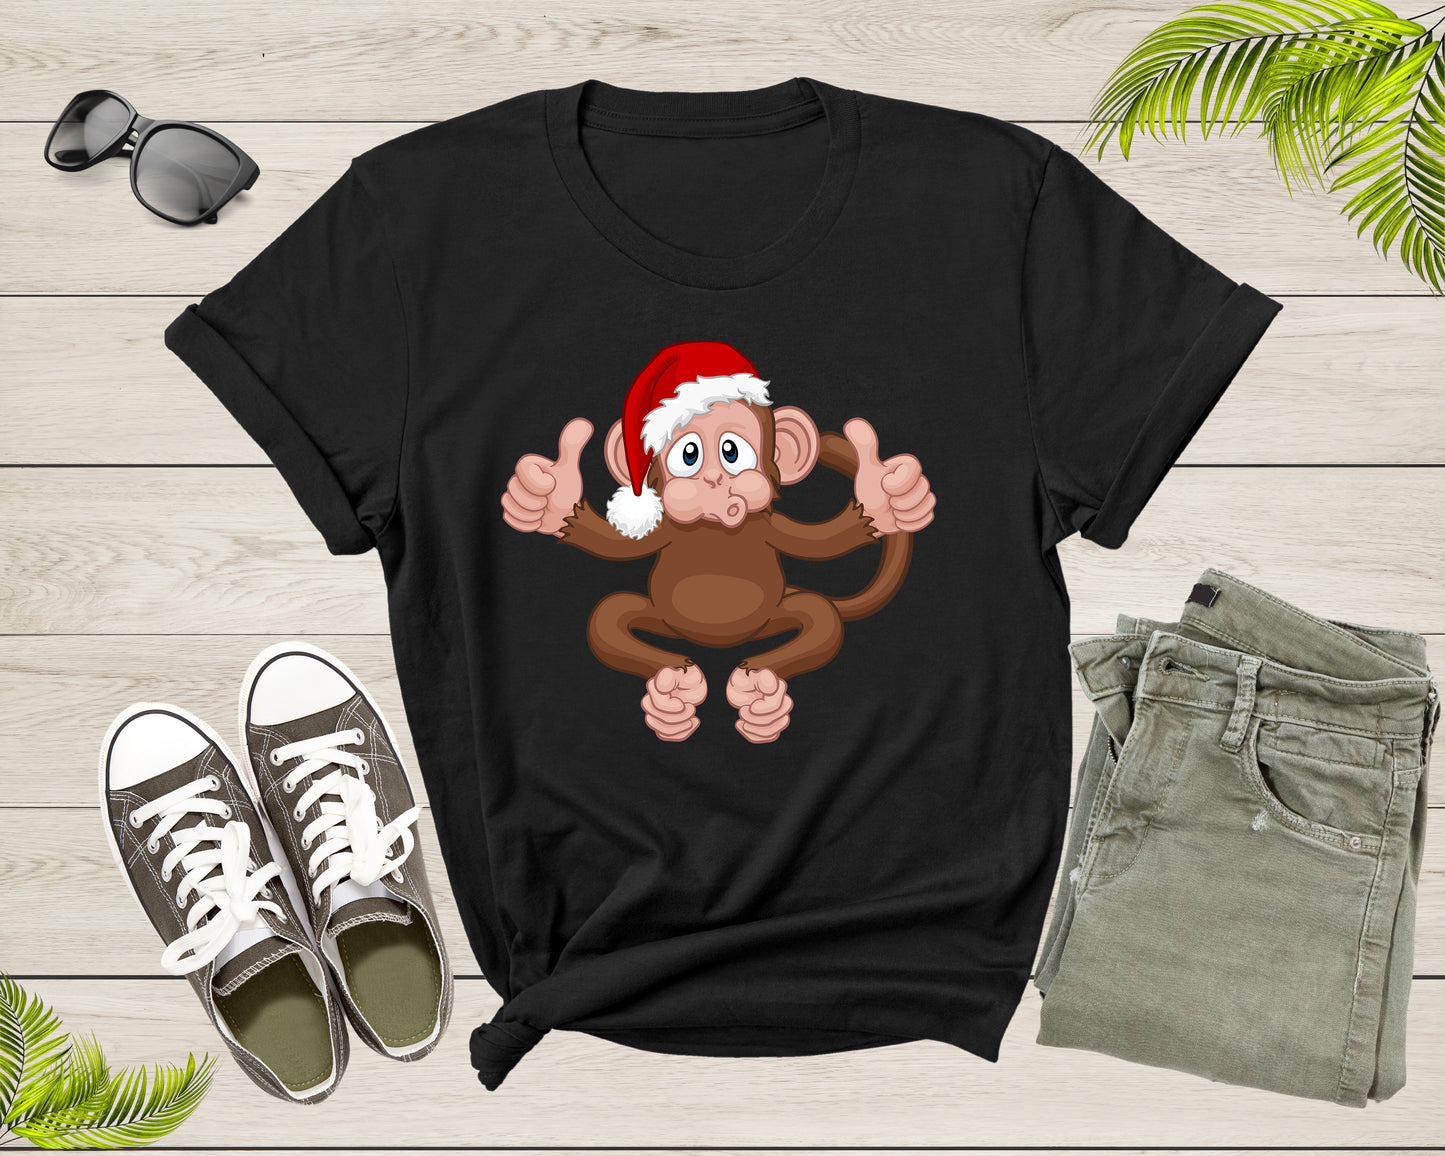 Fun Monkey Wearing Xmas Hat Cute Animal Cartoon Character T-Shirt Monkey Lover Gift T Shirt for Men Women Kids Boys Girls Graphic Tshirt